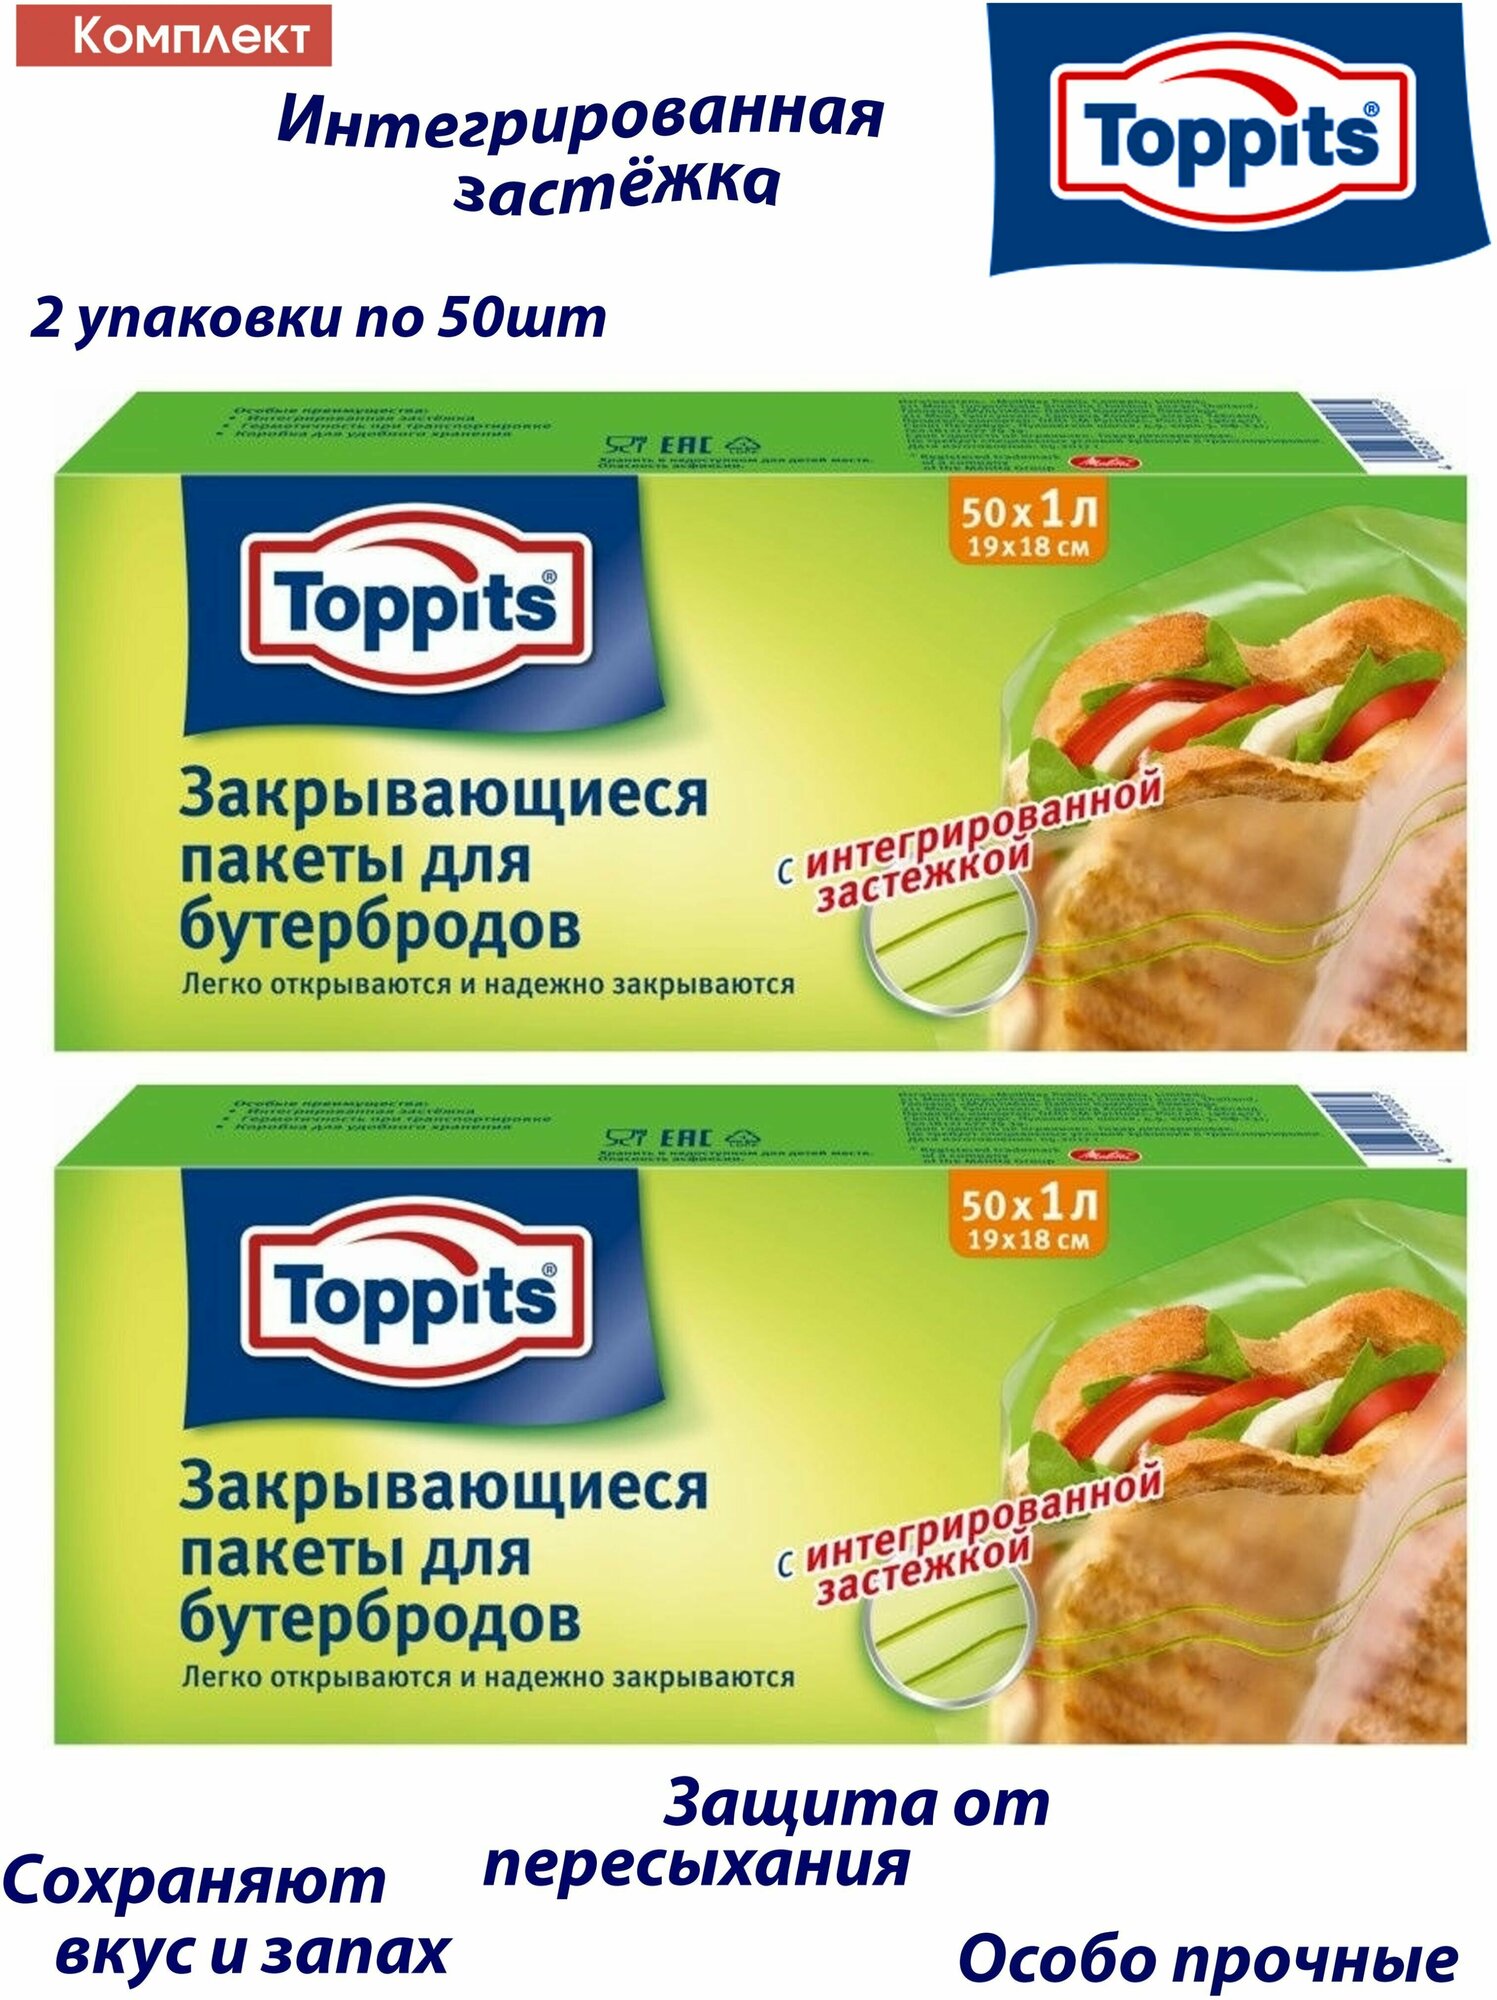 Комплект: TOPPITS Пакеты для бутербродов 2 упаковки по 50штх1л